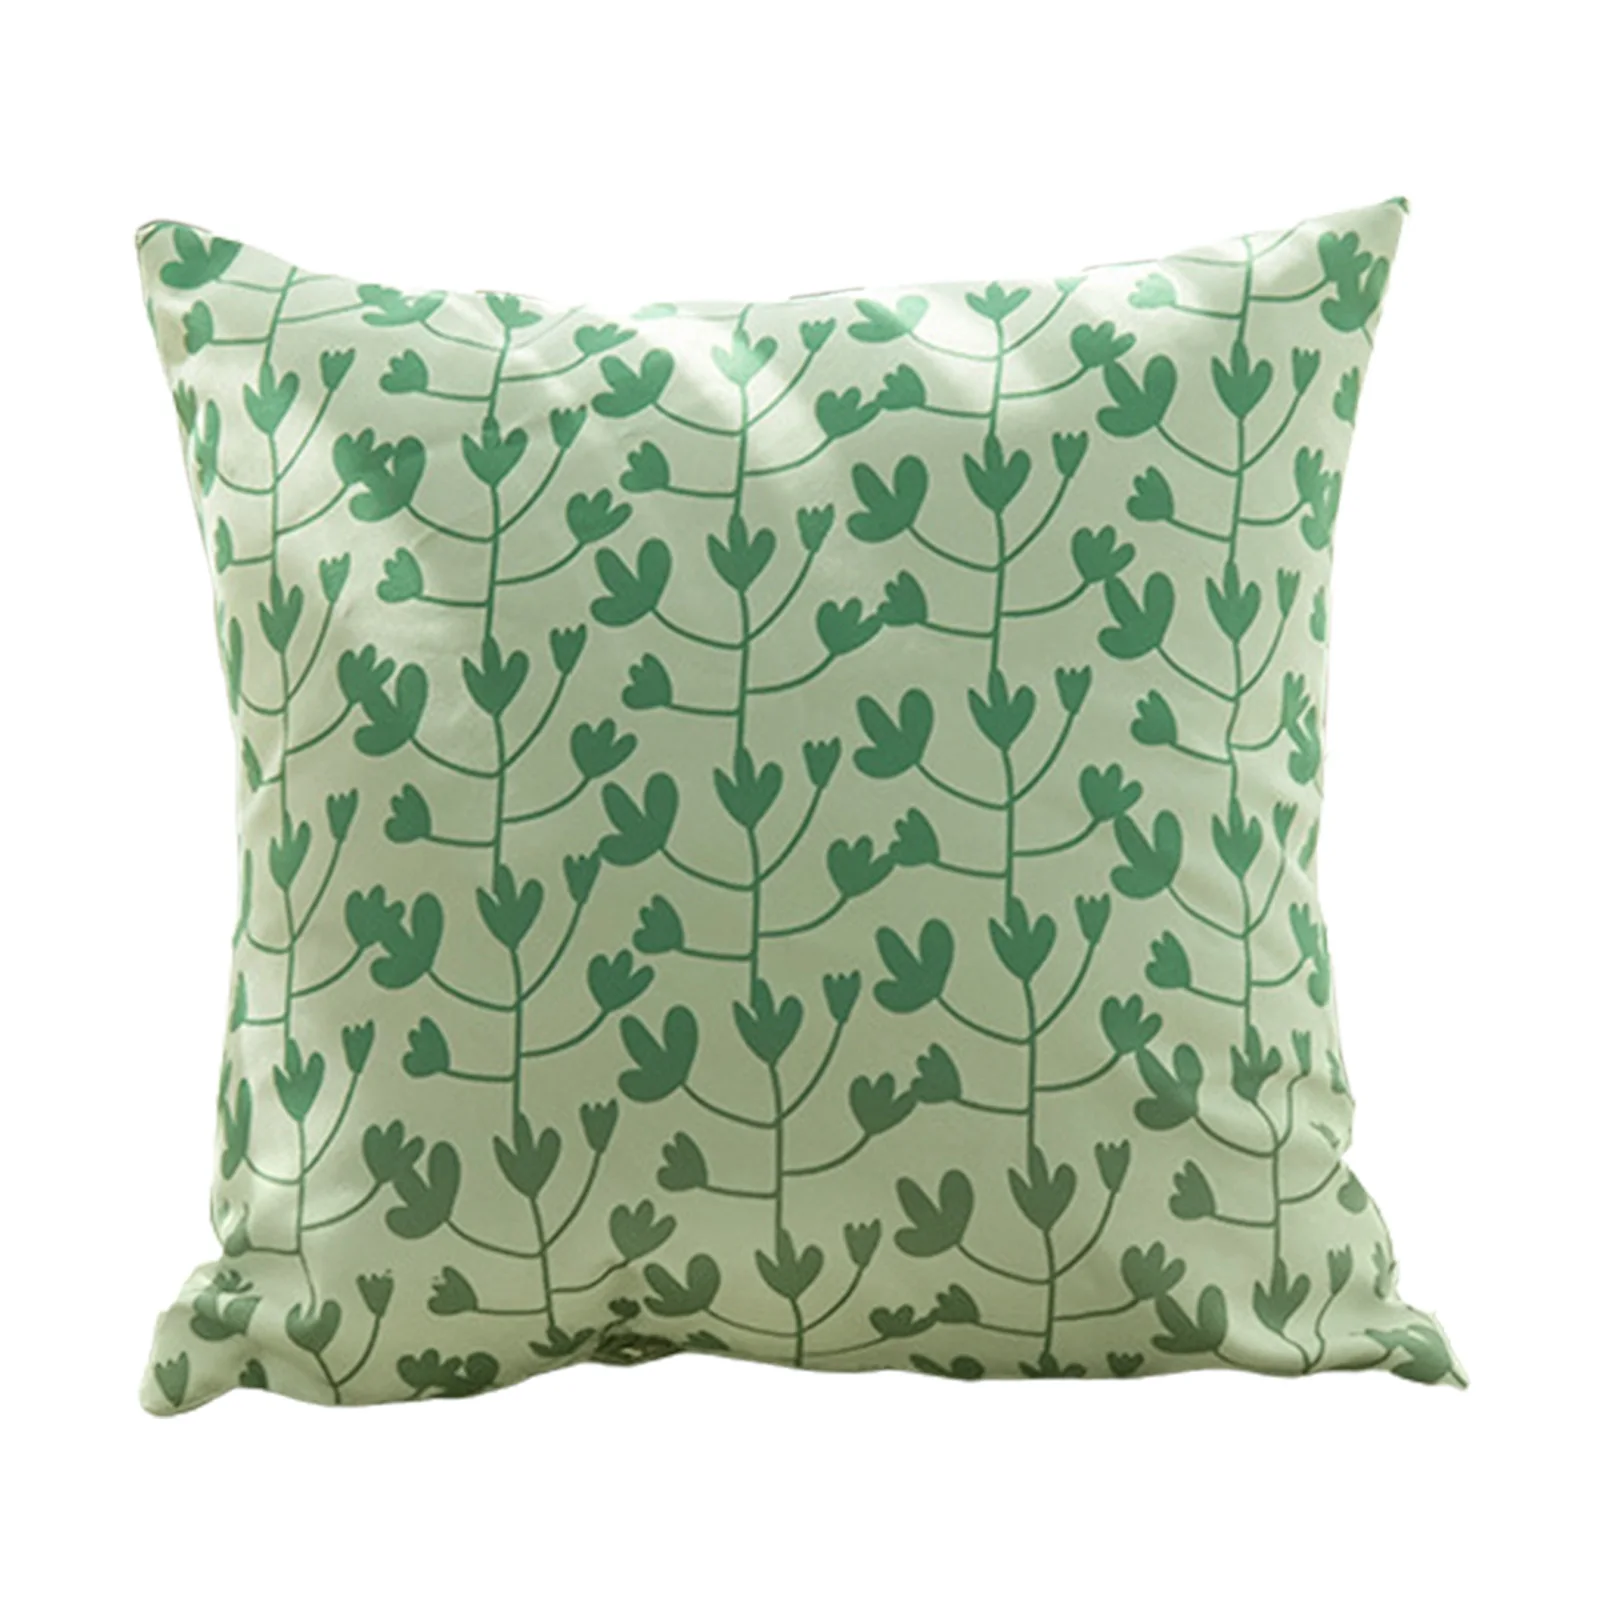 

Tropical Plants Cactus Monstera Summer Decorative Throw Pillows Cushion Cover Palm Leaf Green Home Decor Waterproof Pillowcase